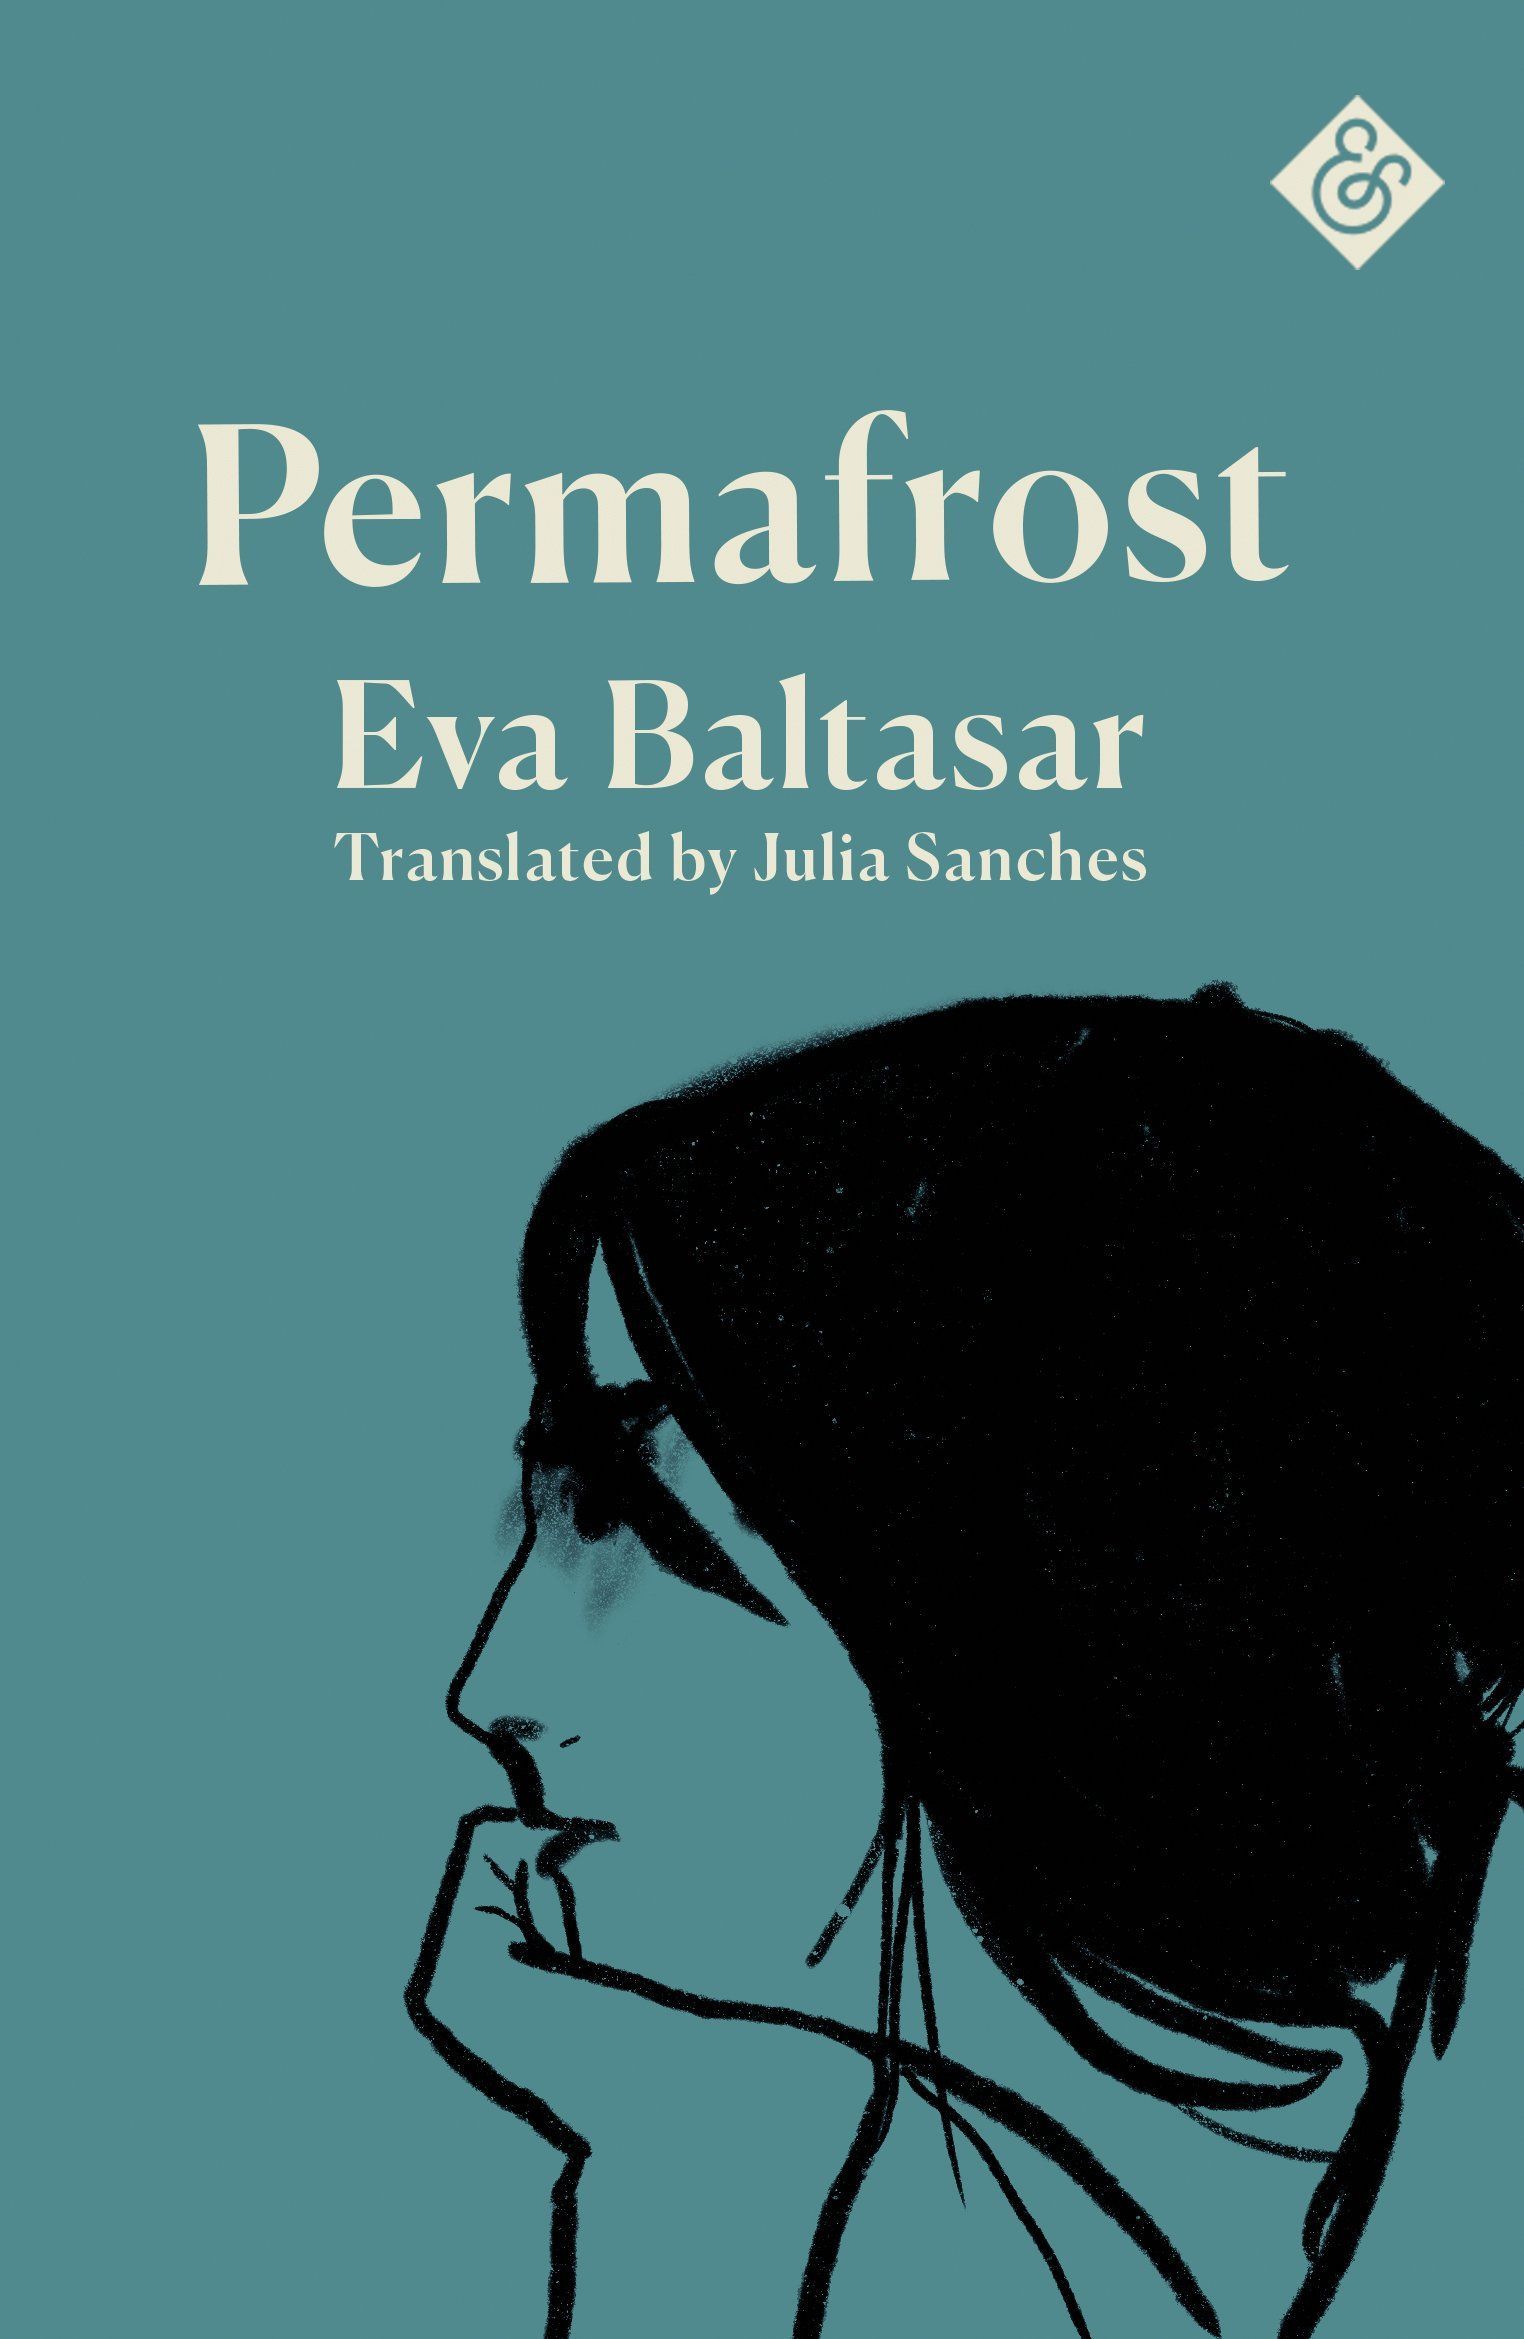 A Home on the Margins: On Eva Baltasar’s “Permafrost”